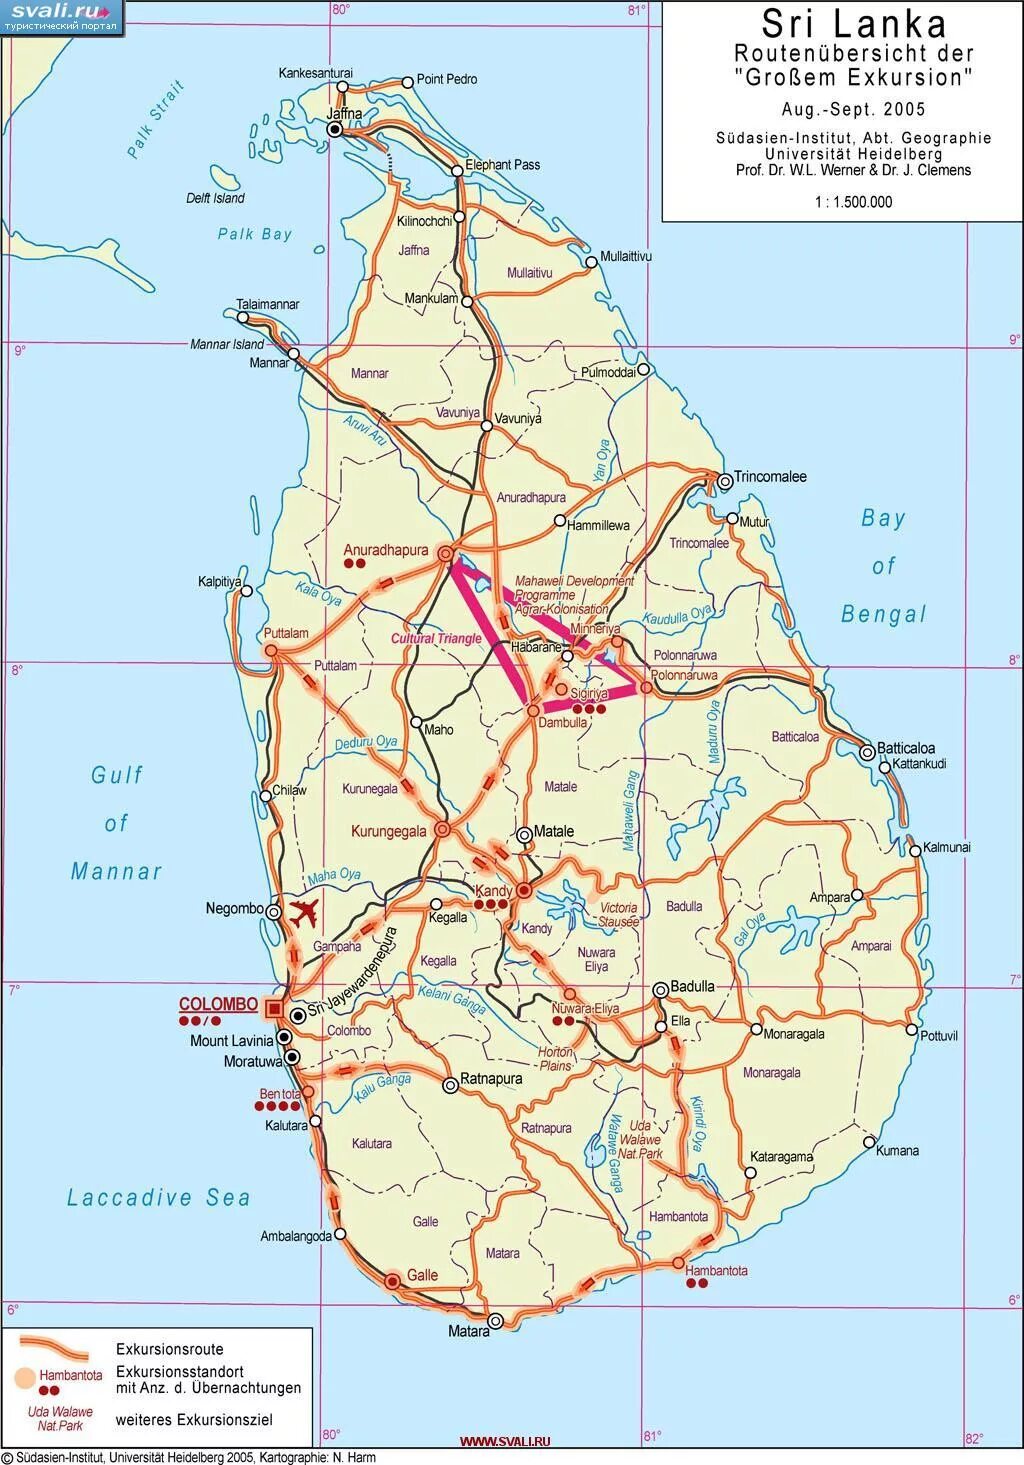 Достопримечательности шри ланки на карте. Карта Шри Ланки. Шри Ланка туристическая карта. Туристическая карта Шри Ланке. Шри-Ланка достопримечательности на карте.